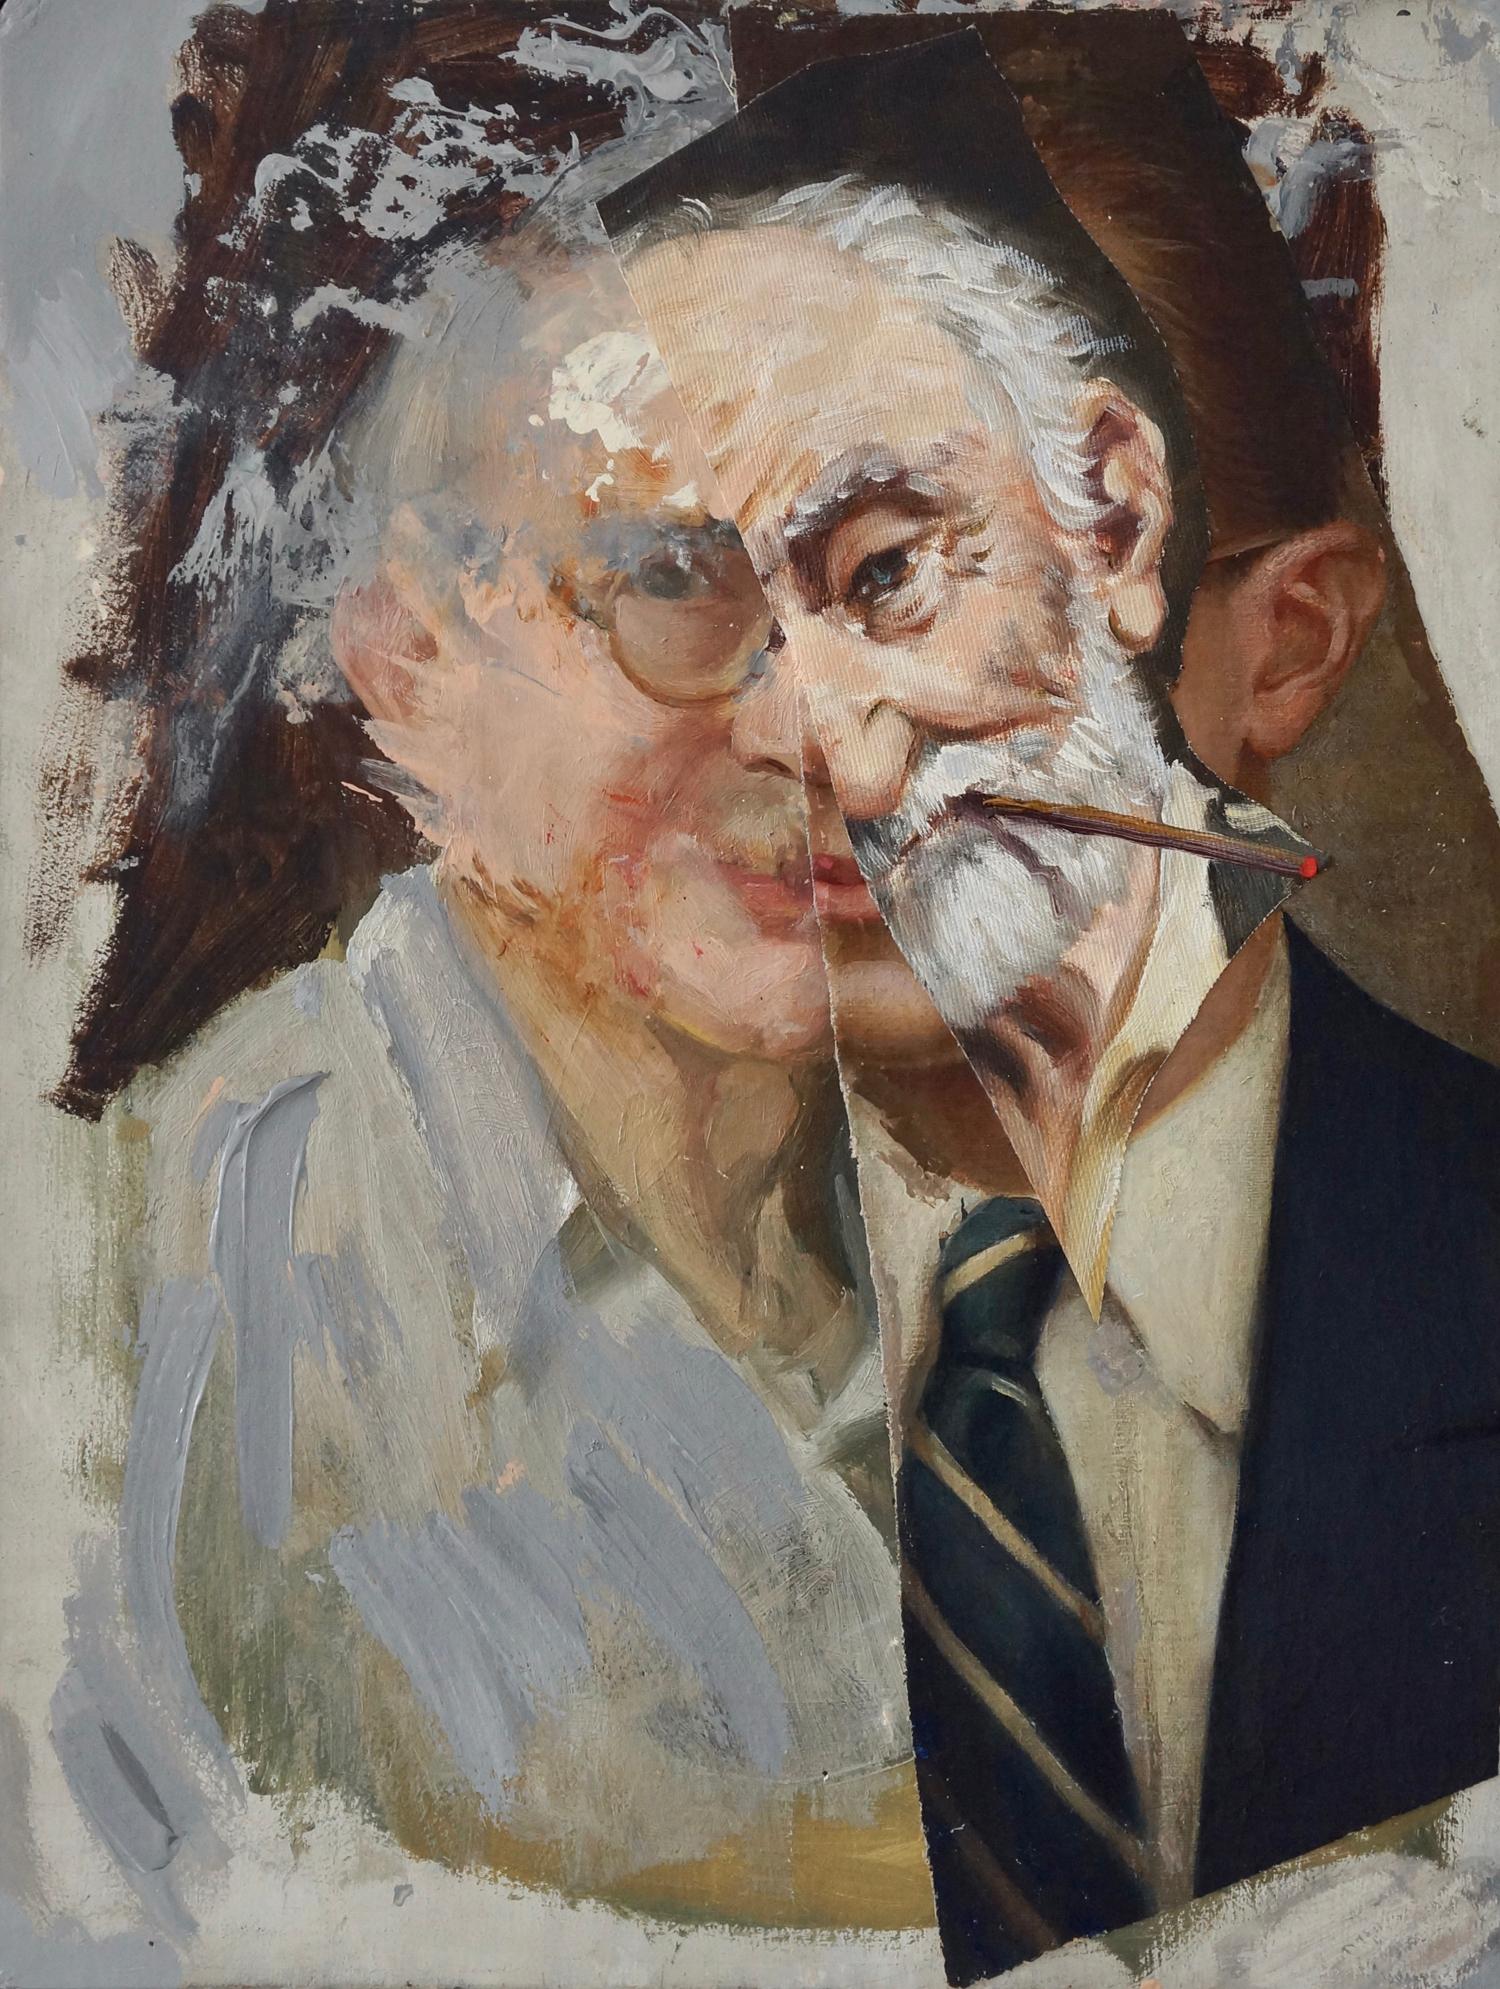 John Baker Portrait Painting - "Old Madman 4", portrait, flesh tones, grey, brown, collage, acrylic painting